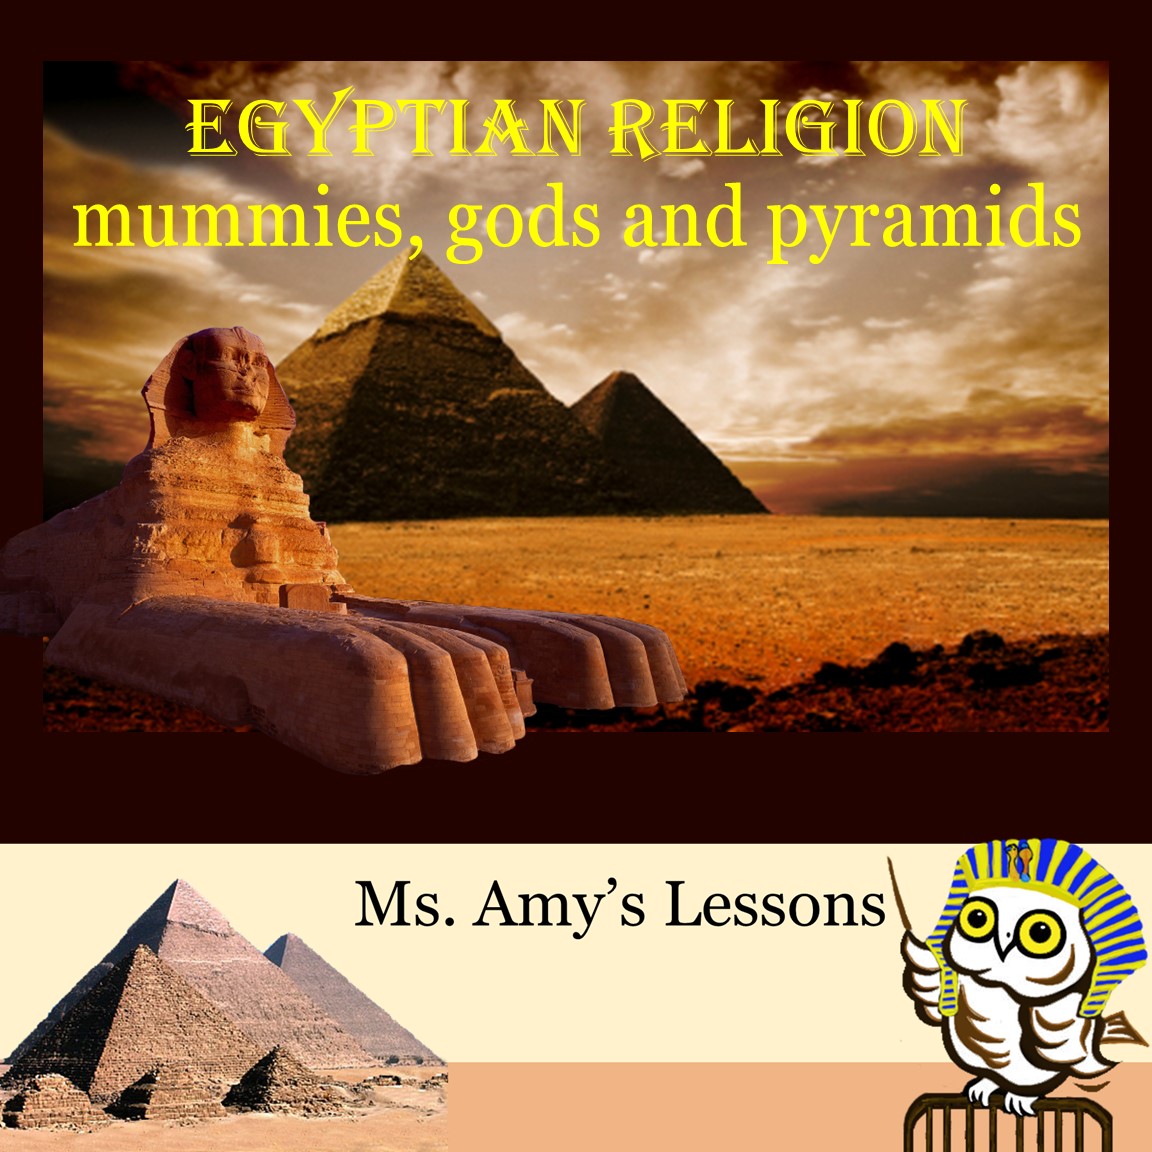 Ancient Egypt: Religious Beliefs mummies, gods and pyramids